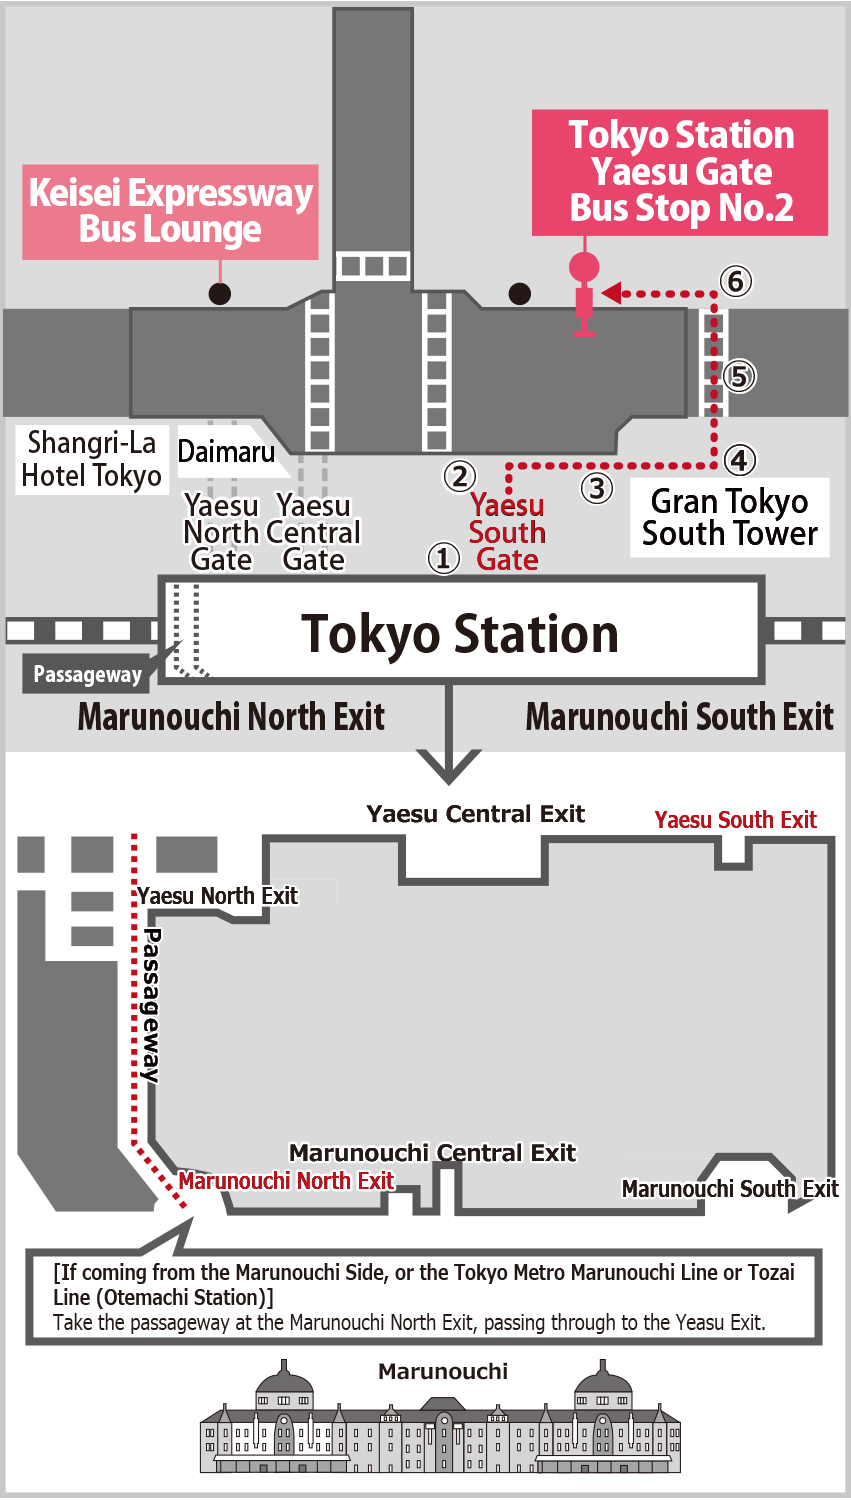 Boarding Location at Tokyo Station